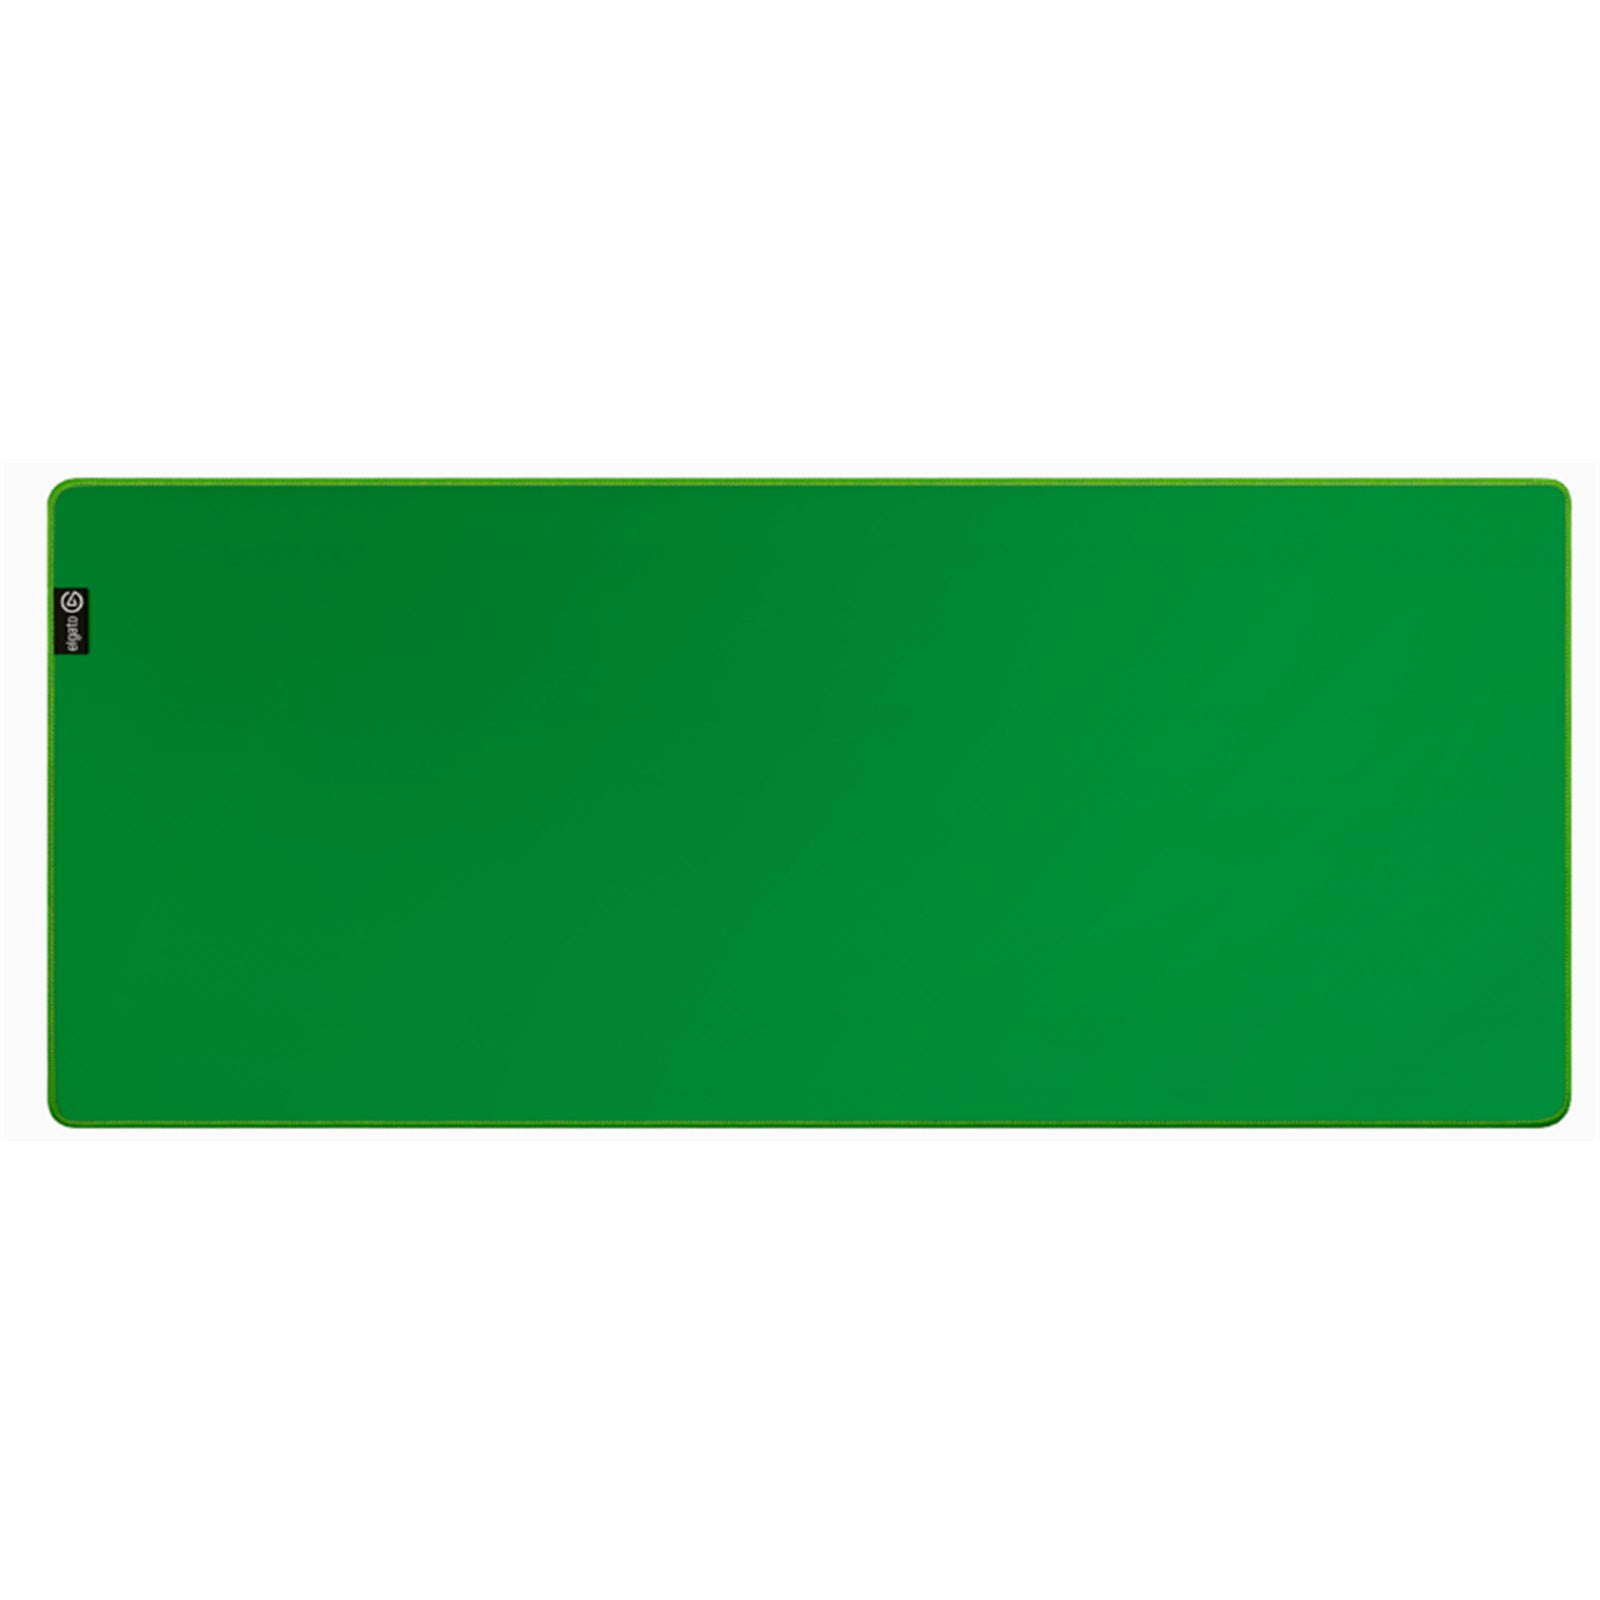 Elgato Green Screen Gaming Mousepad 940x400 mm - Store 974 | ستور ٩٧٤